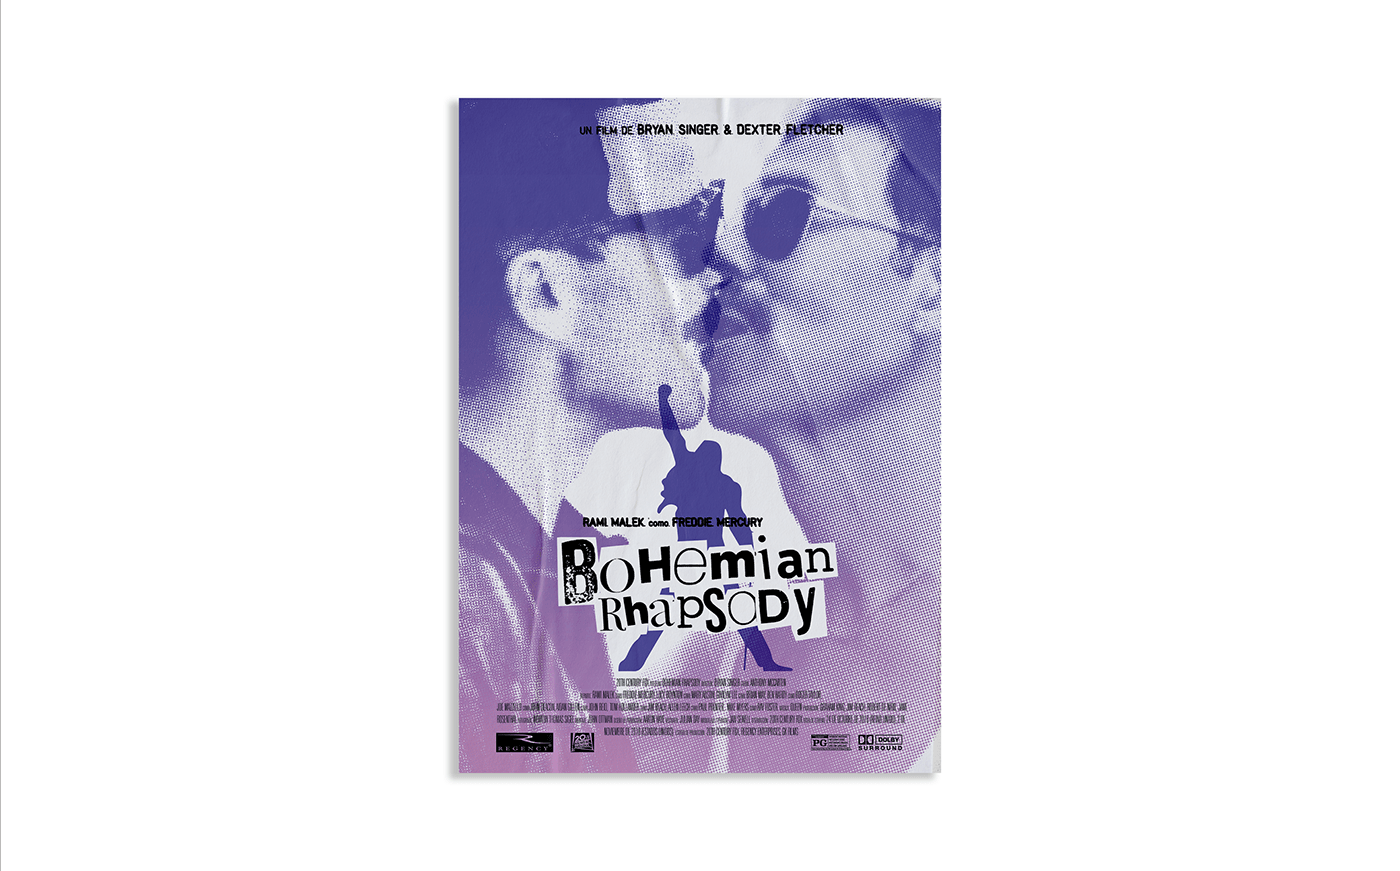 bohemian rhapsody PressBook afiche Afiches poster Poster Design sistema diseño gráfico retorica de la imagen DG2